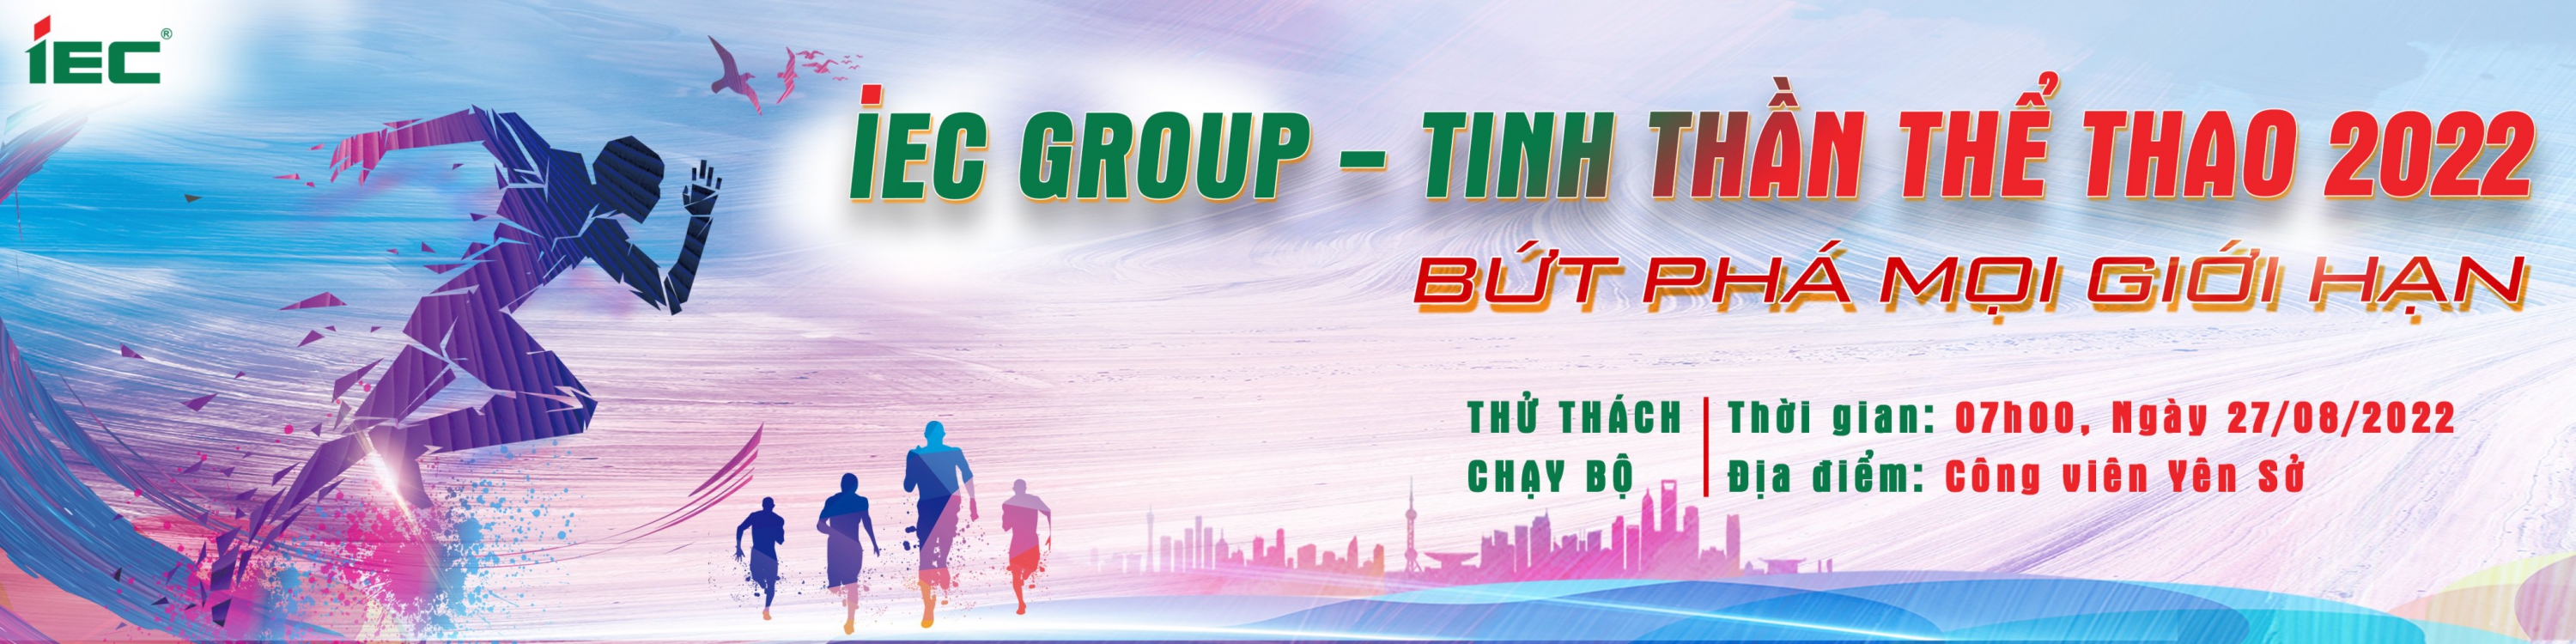 IEC GROUP - TINH THẦN THỂ THAO 2022